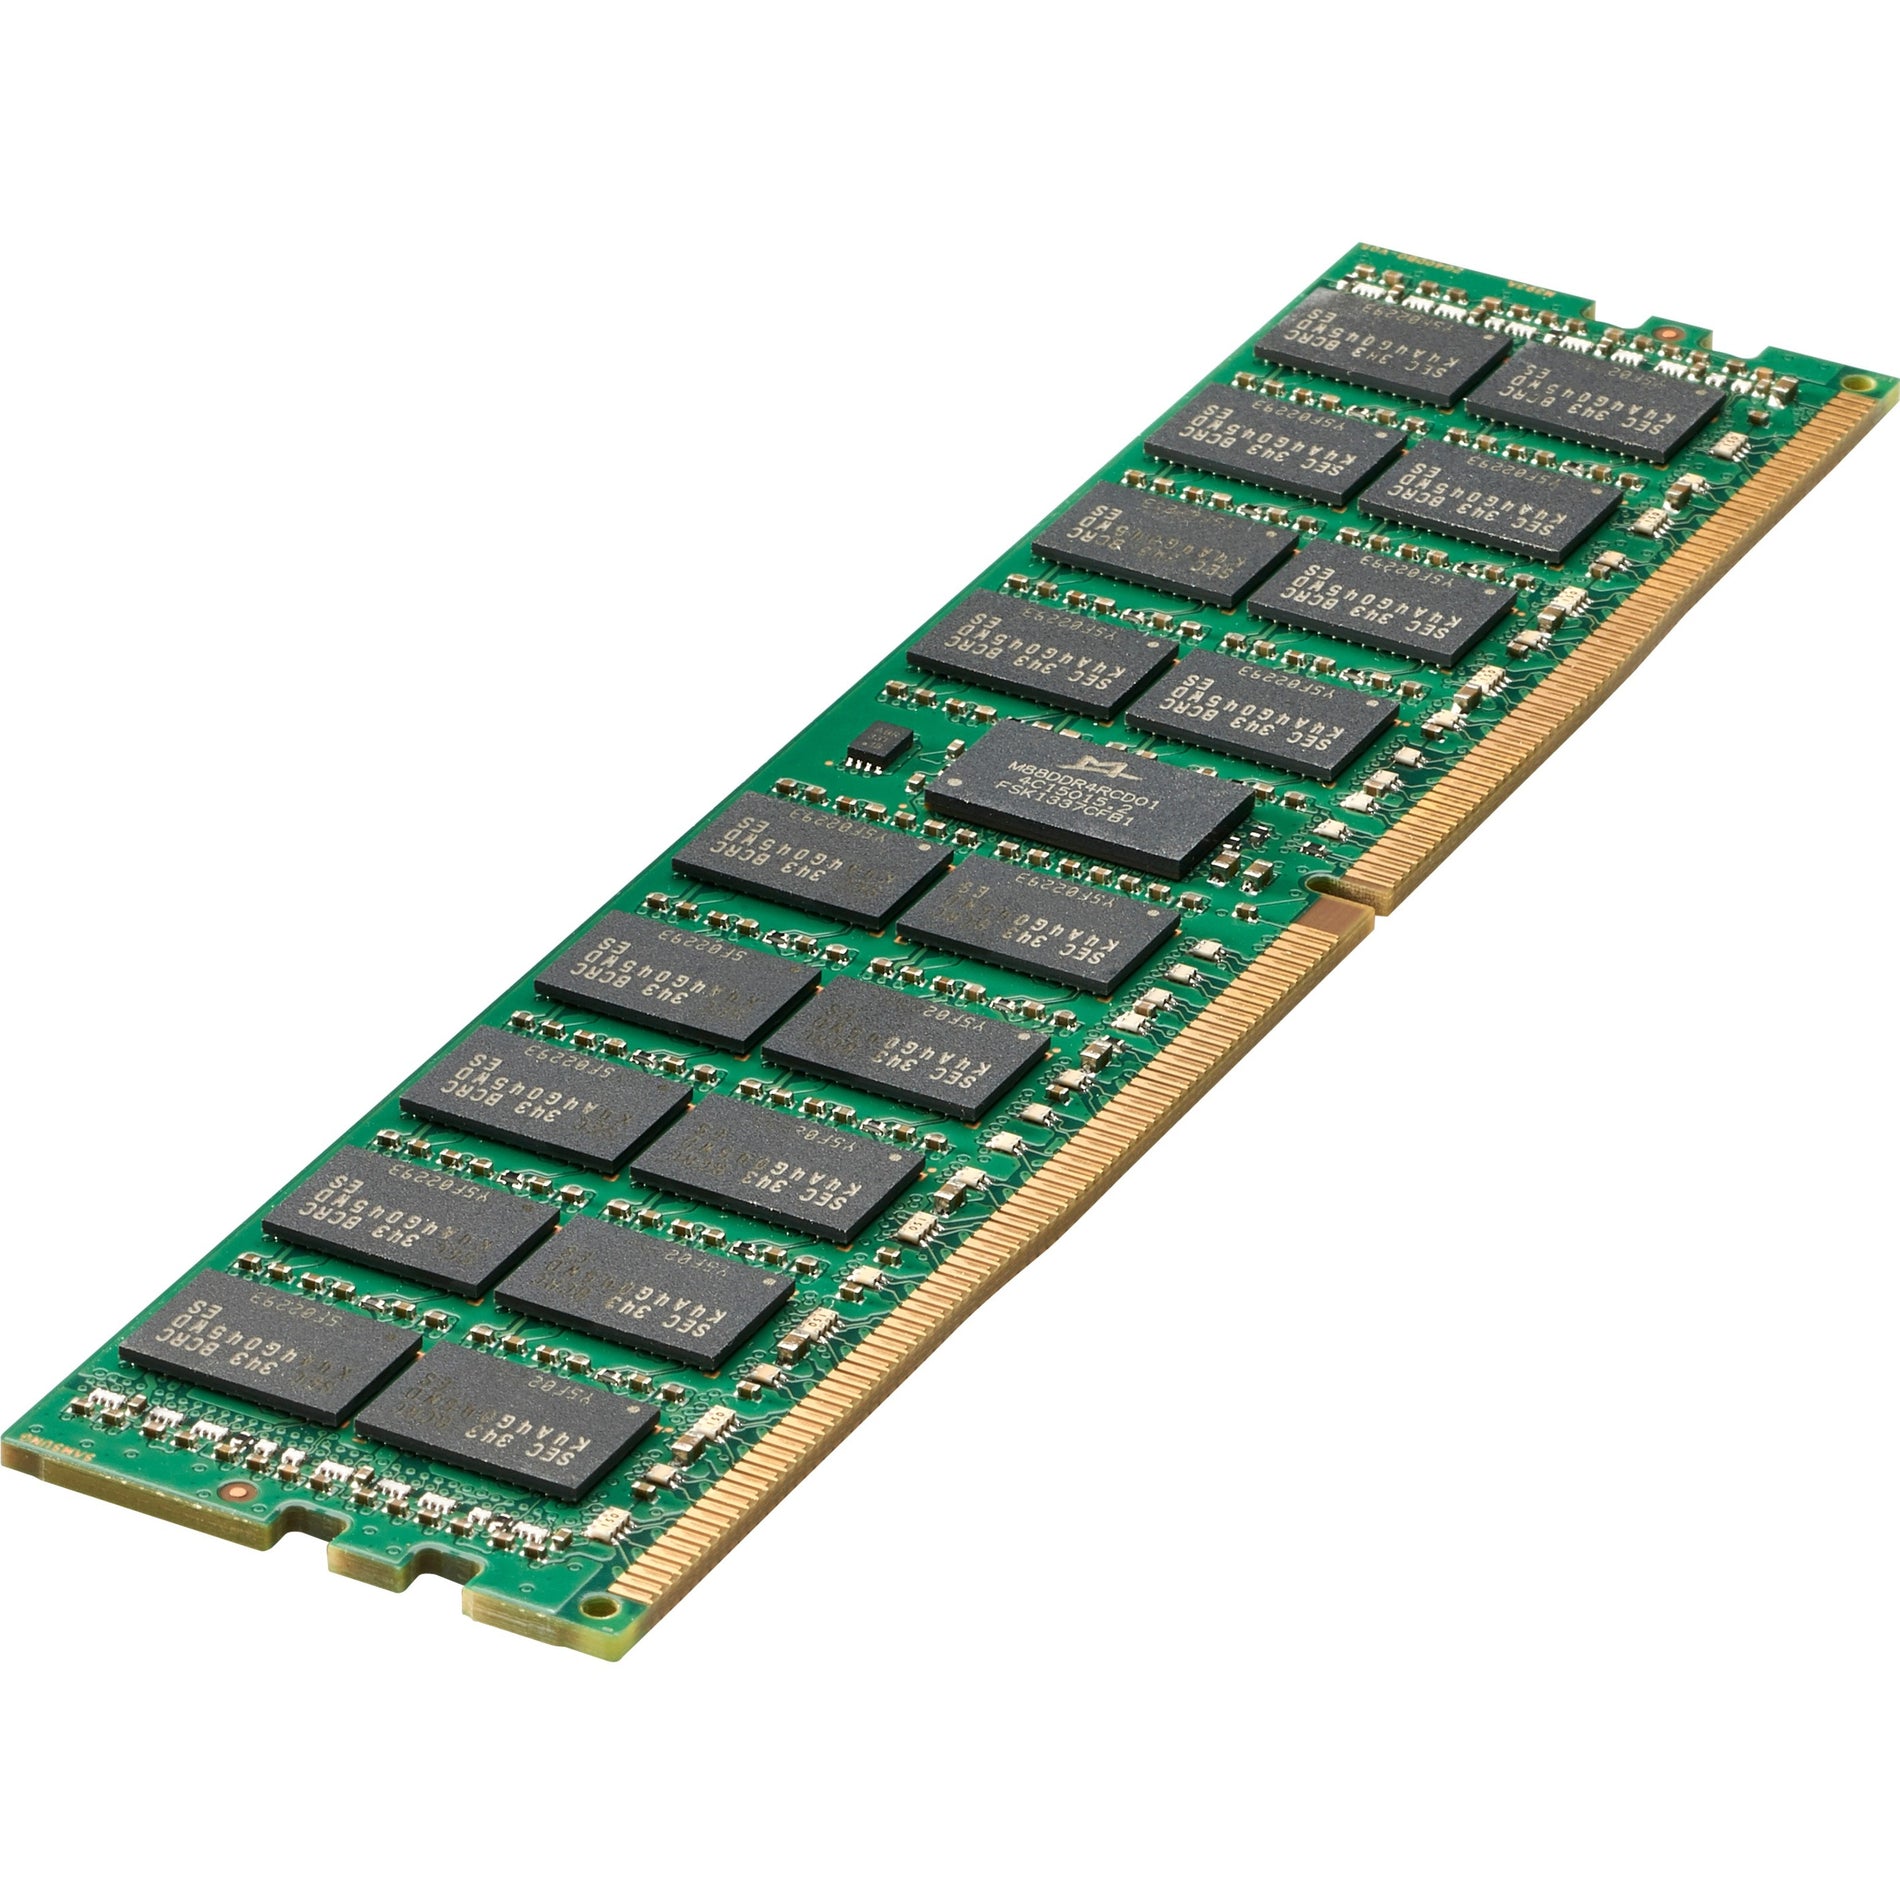 HPE 835955-B21 16GB DDR4 SDRAM Memory Module, High Performance RAM for Servers